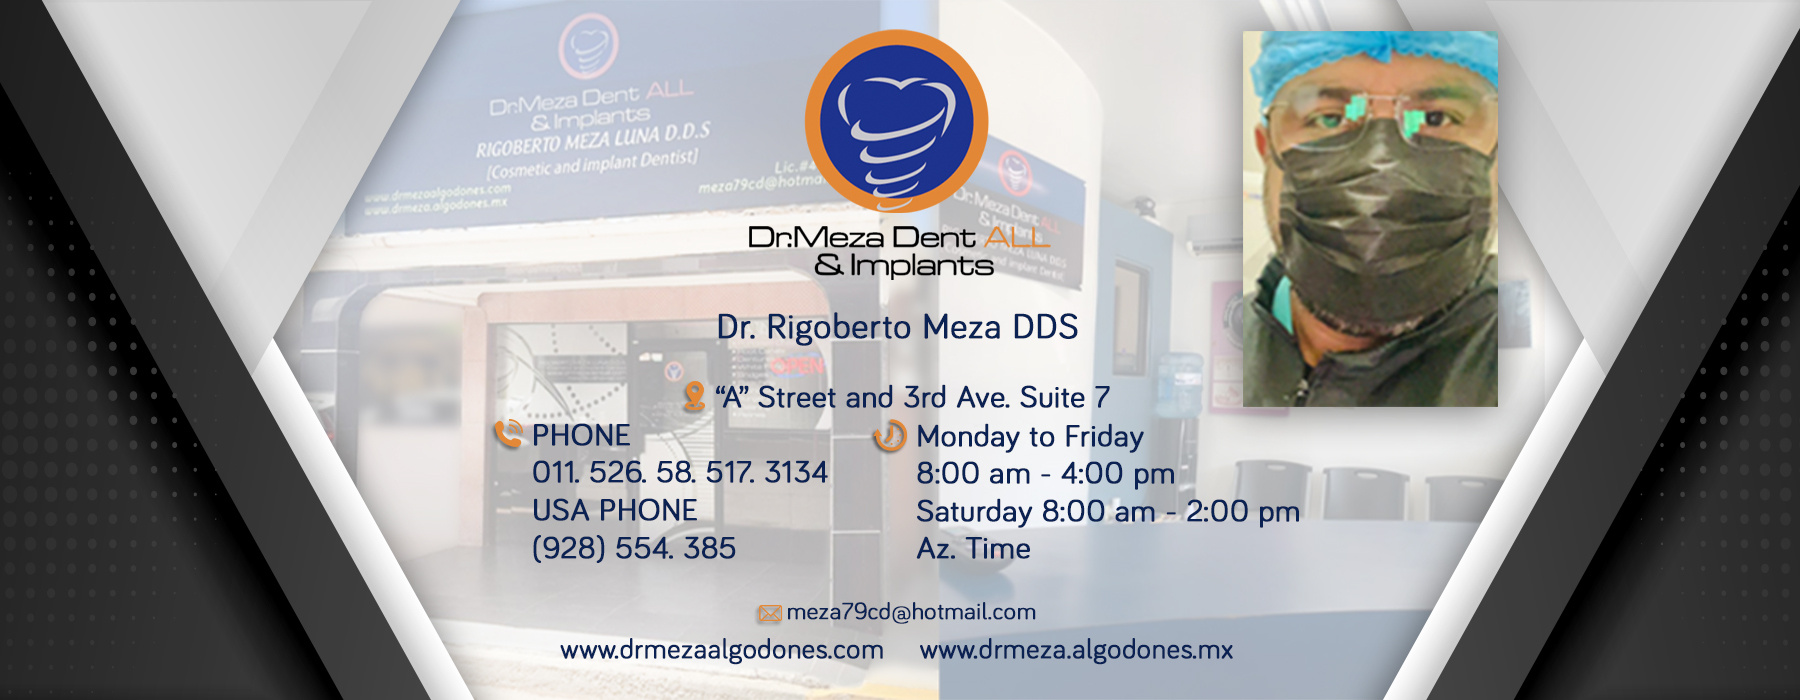 Dr. Meza Dent ALL & Implants